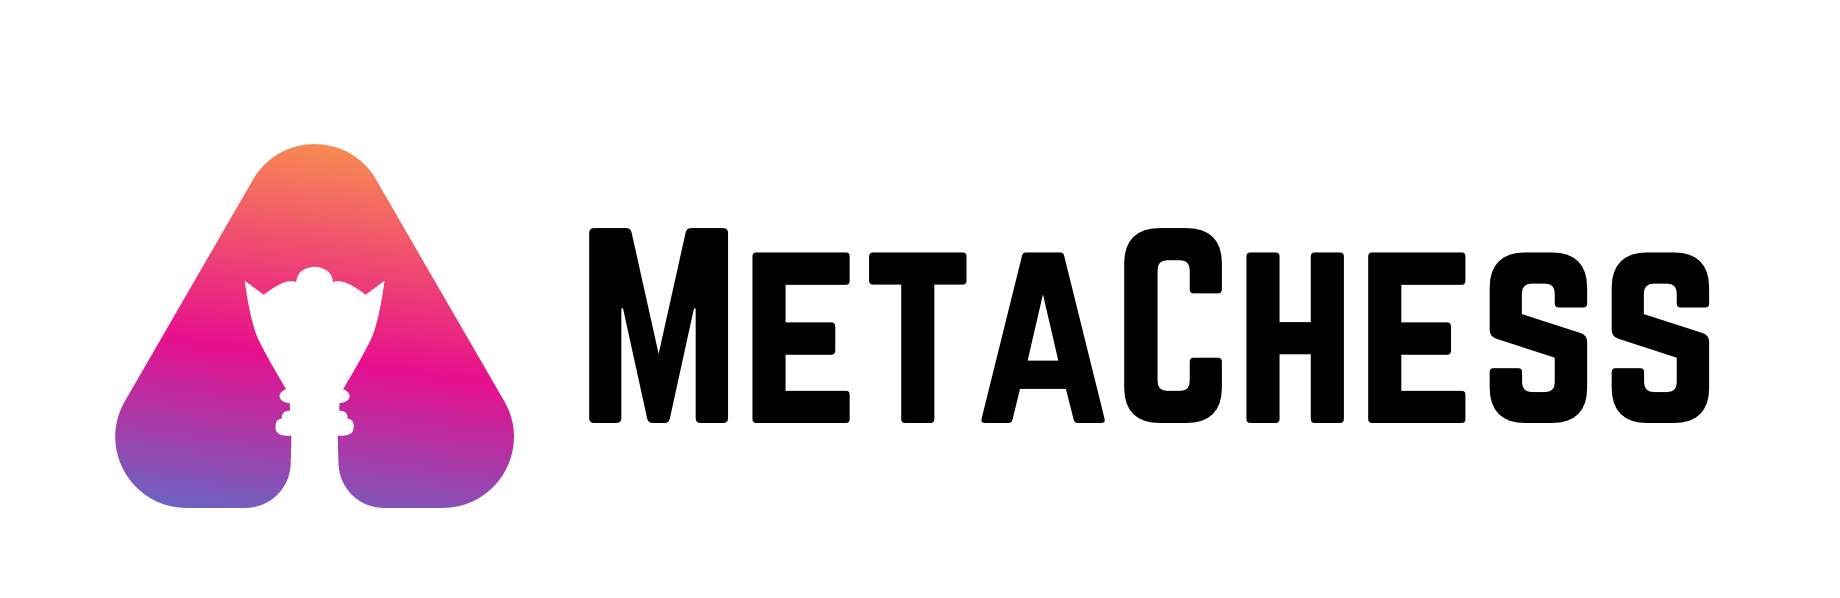 MetaChess